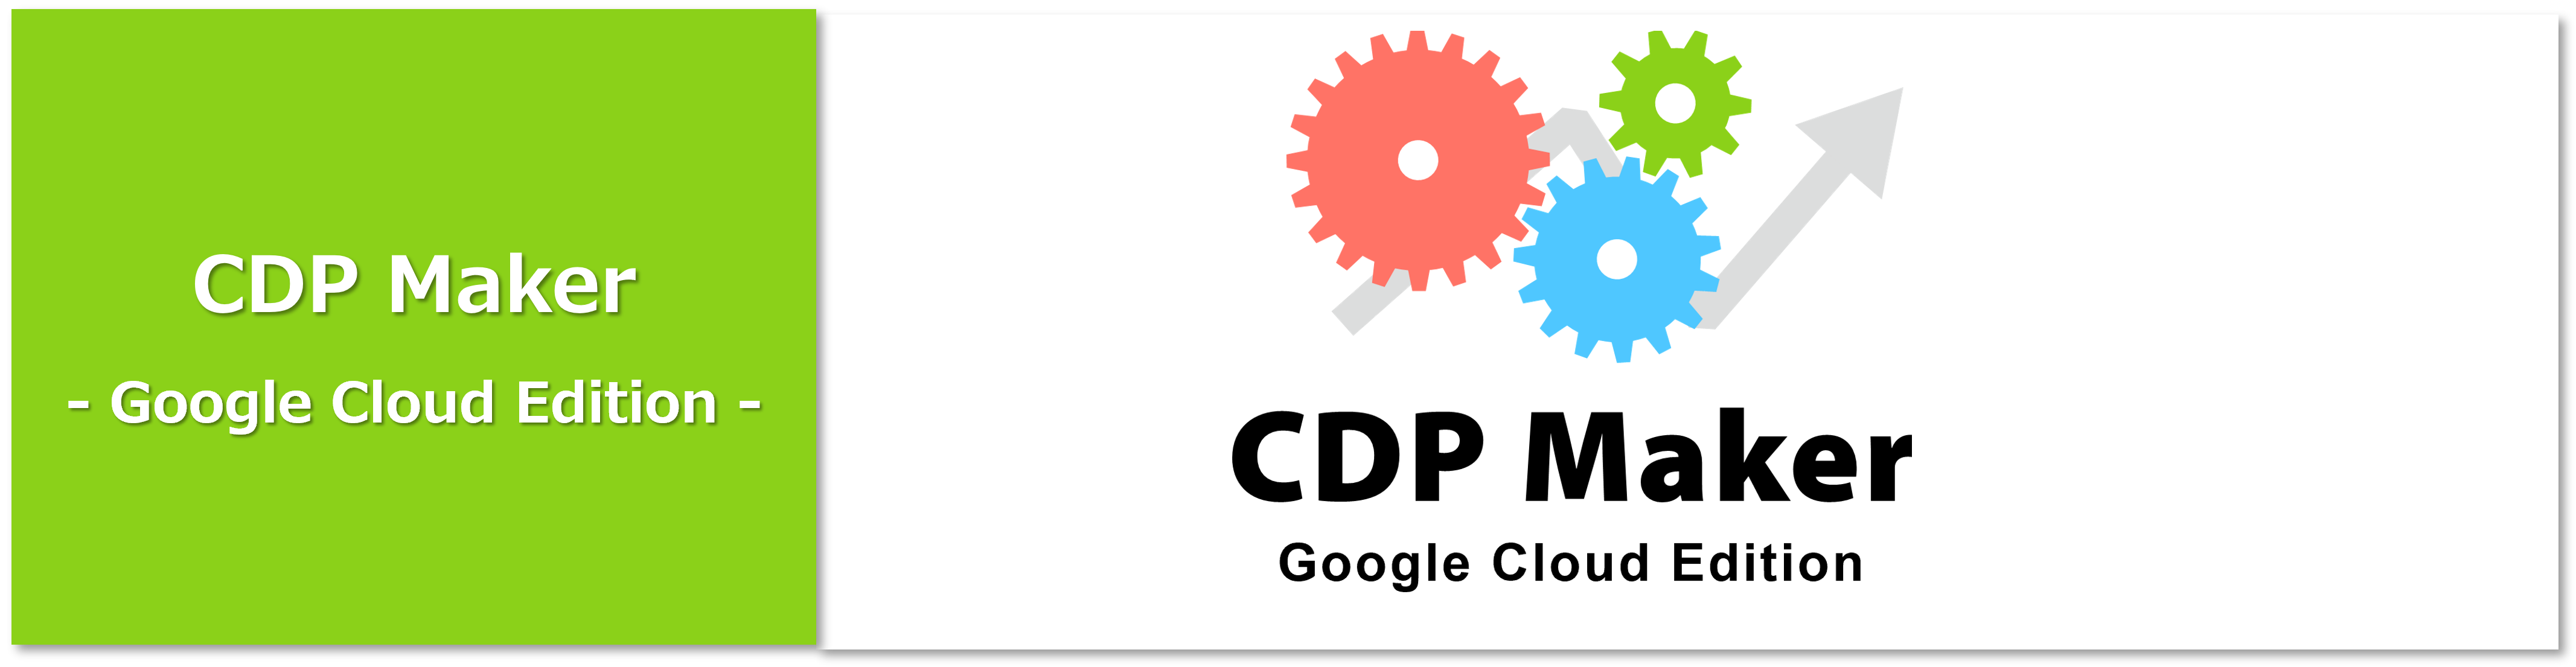 CDP Maker -Google Cloud Edition-